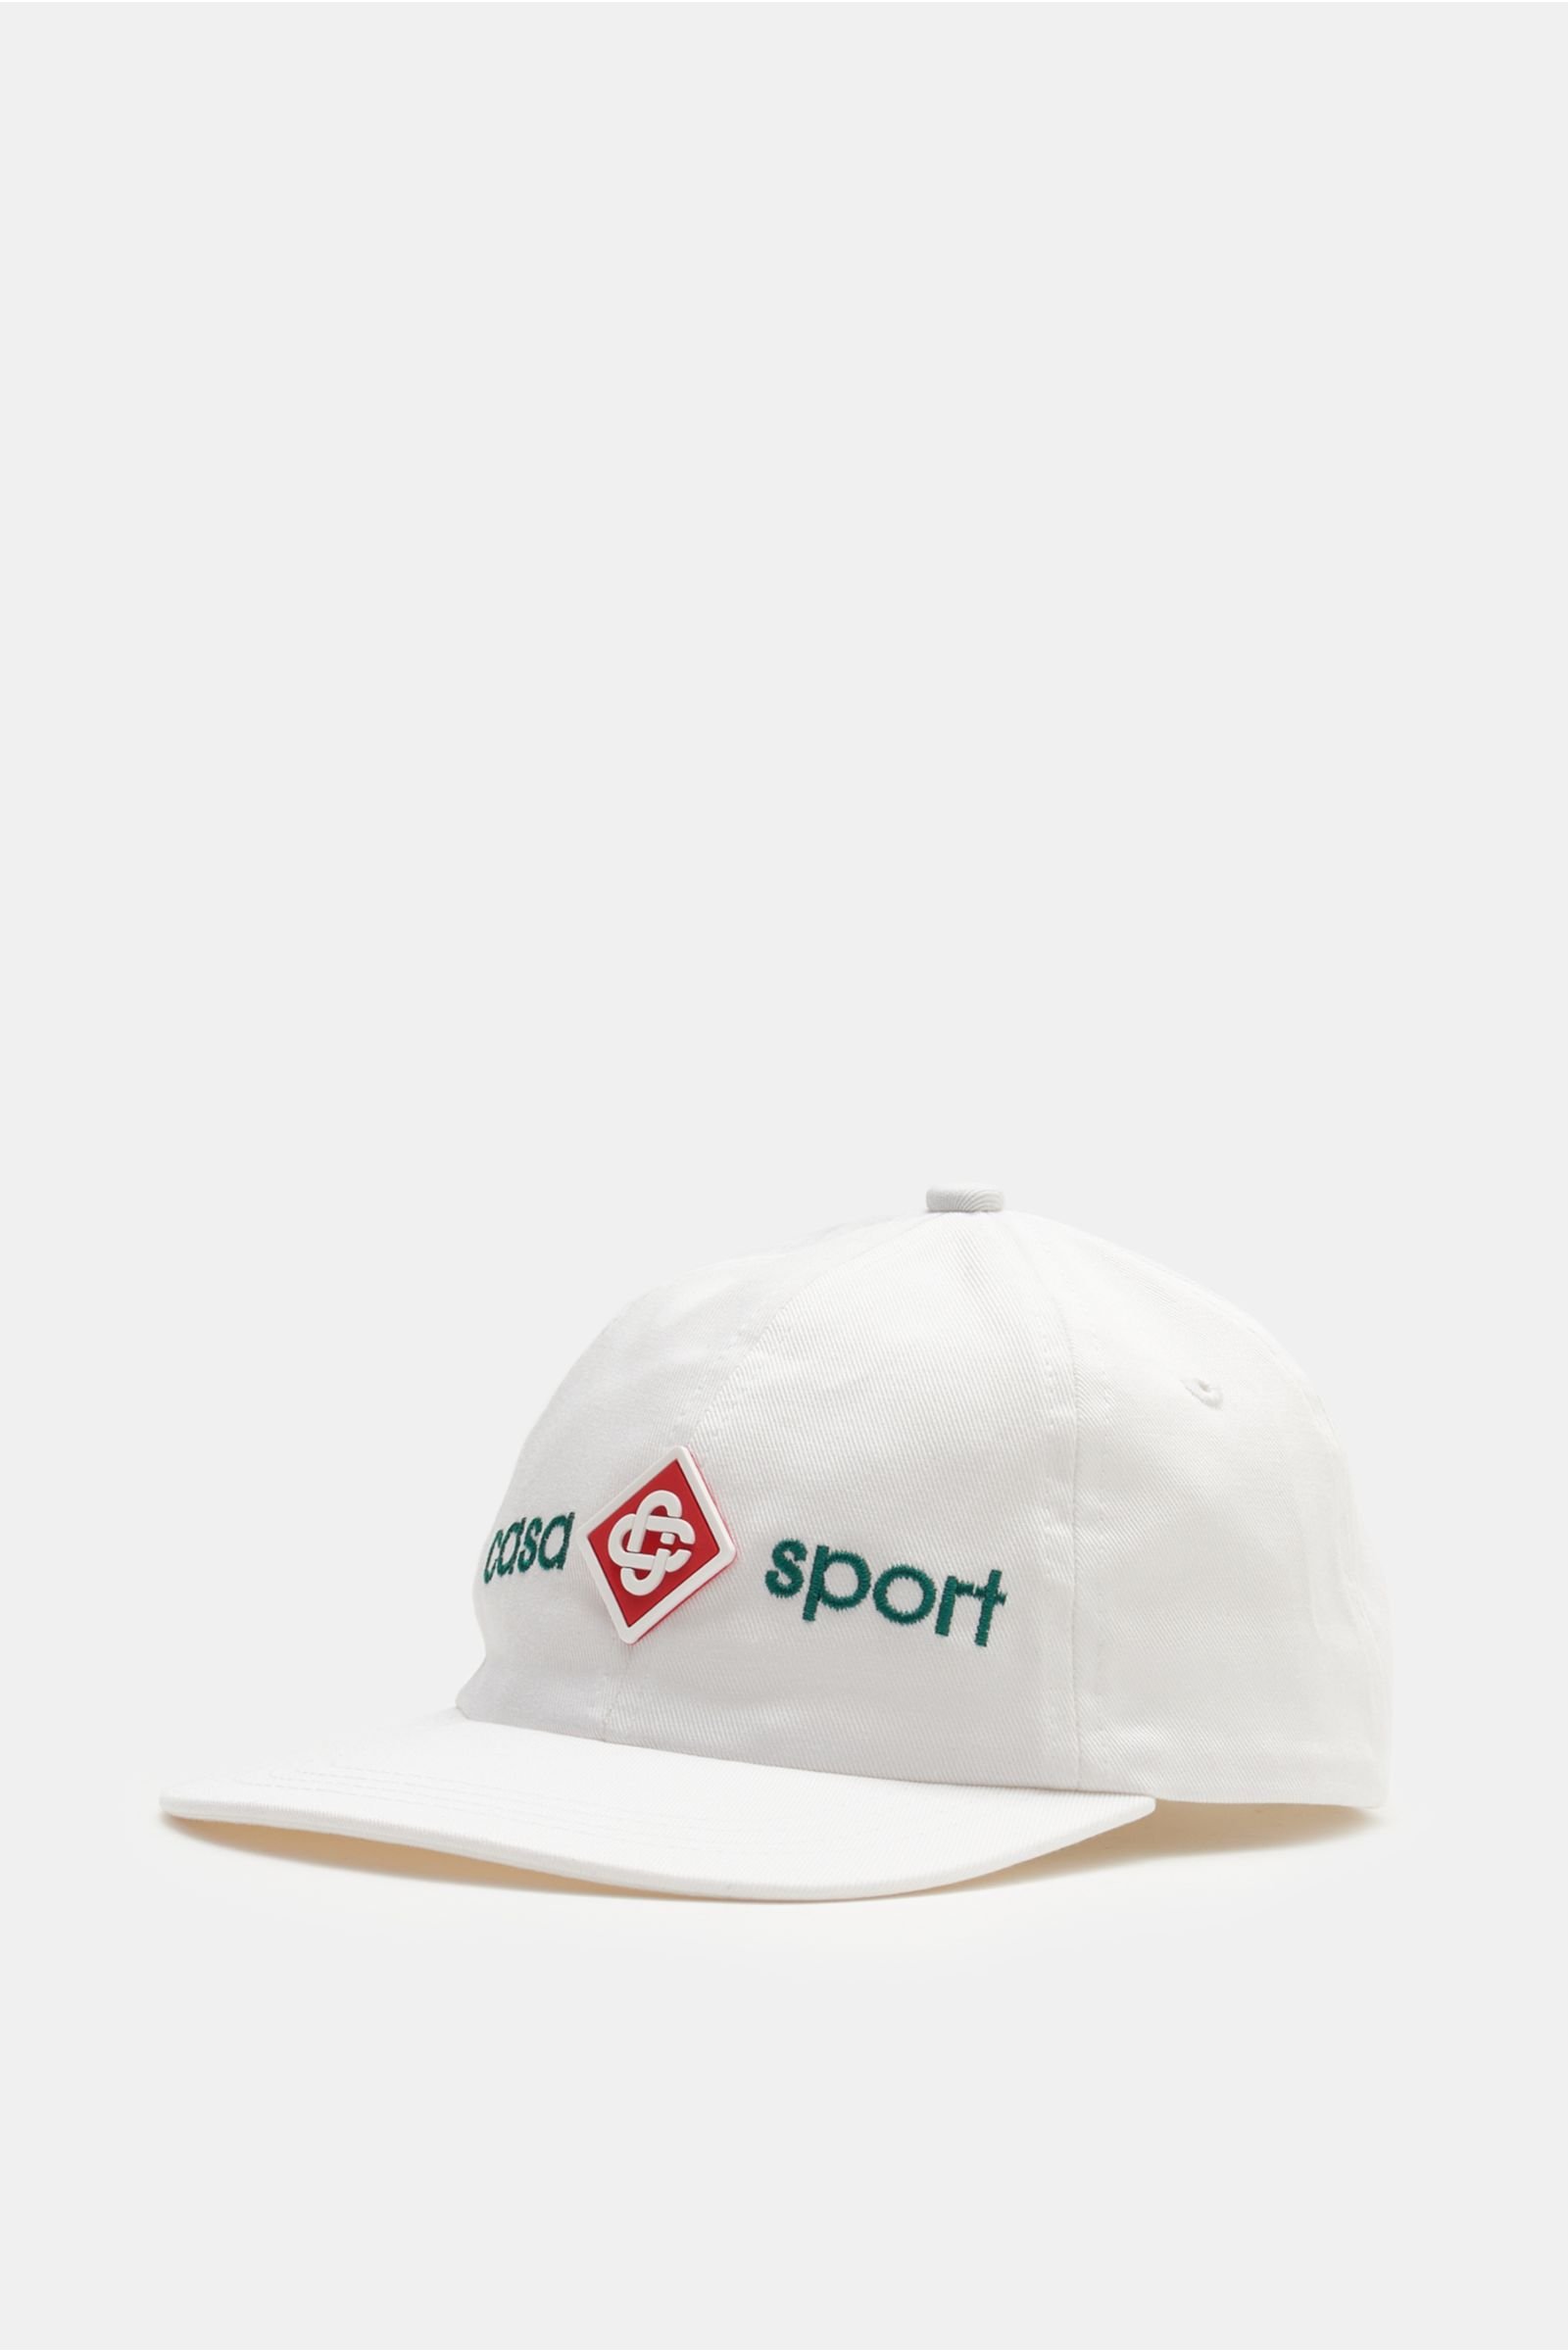 Baseball cap 'Casa Sport' white